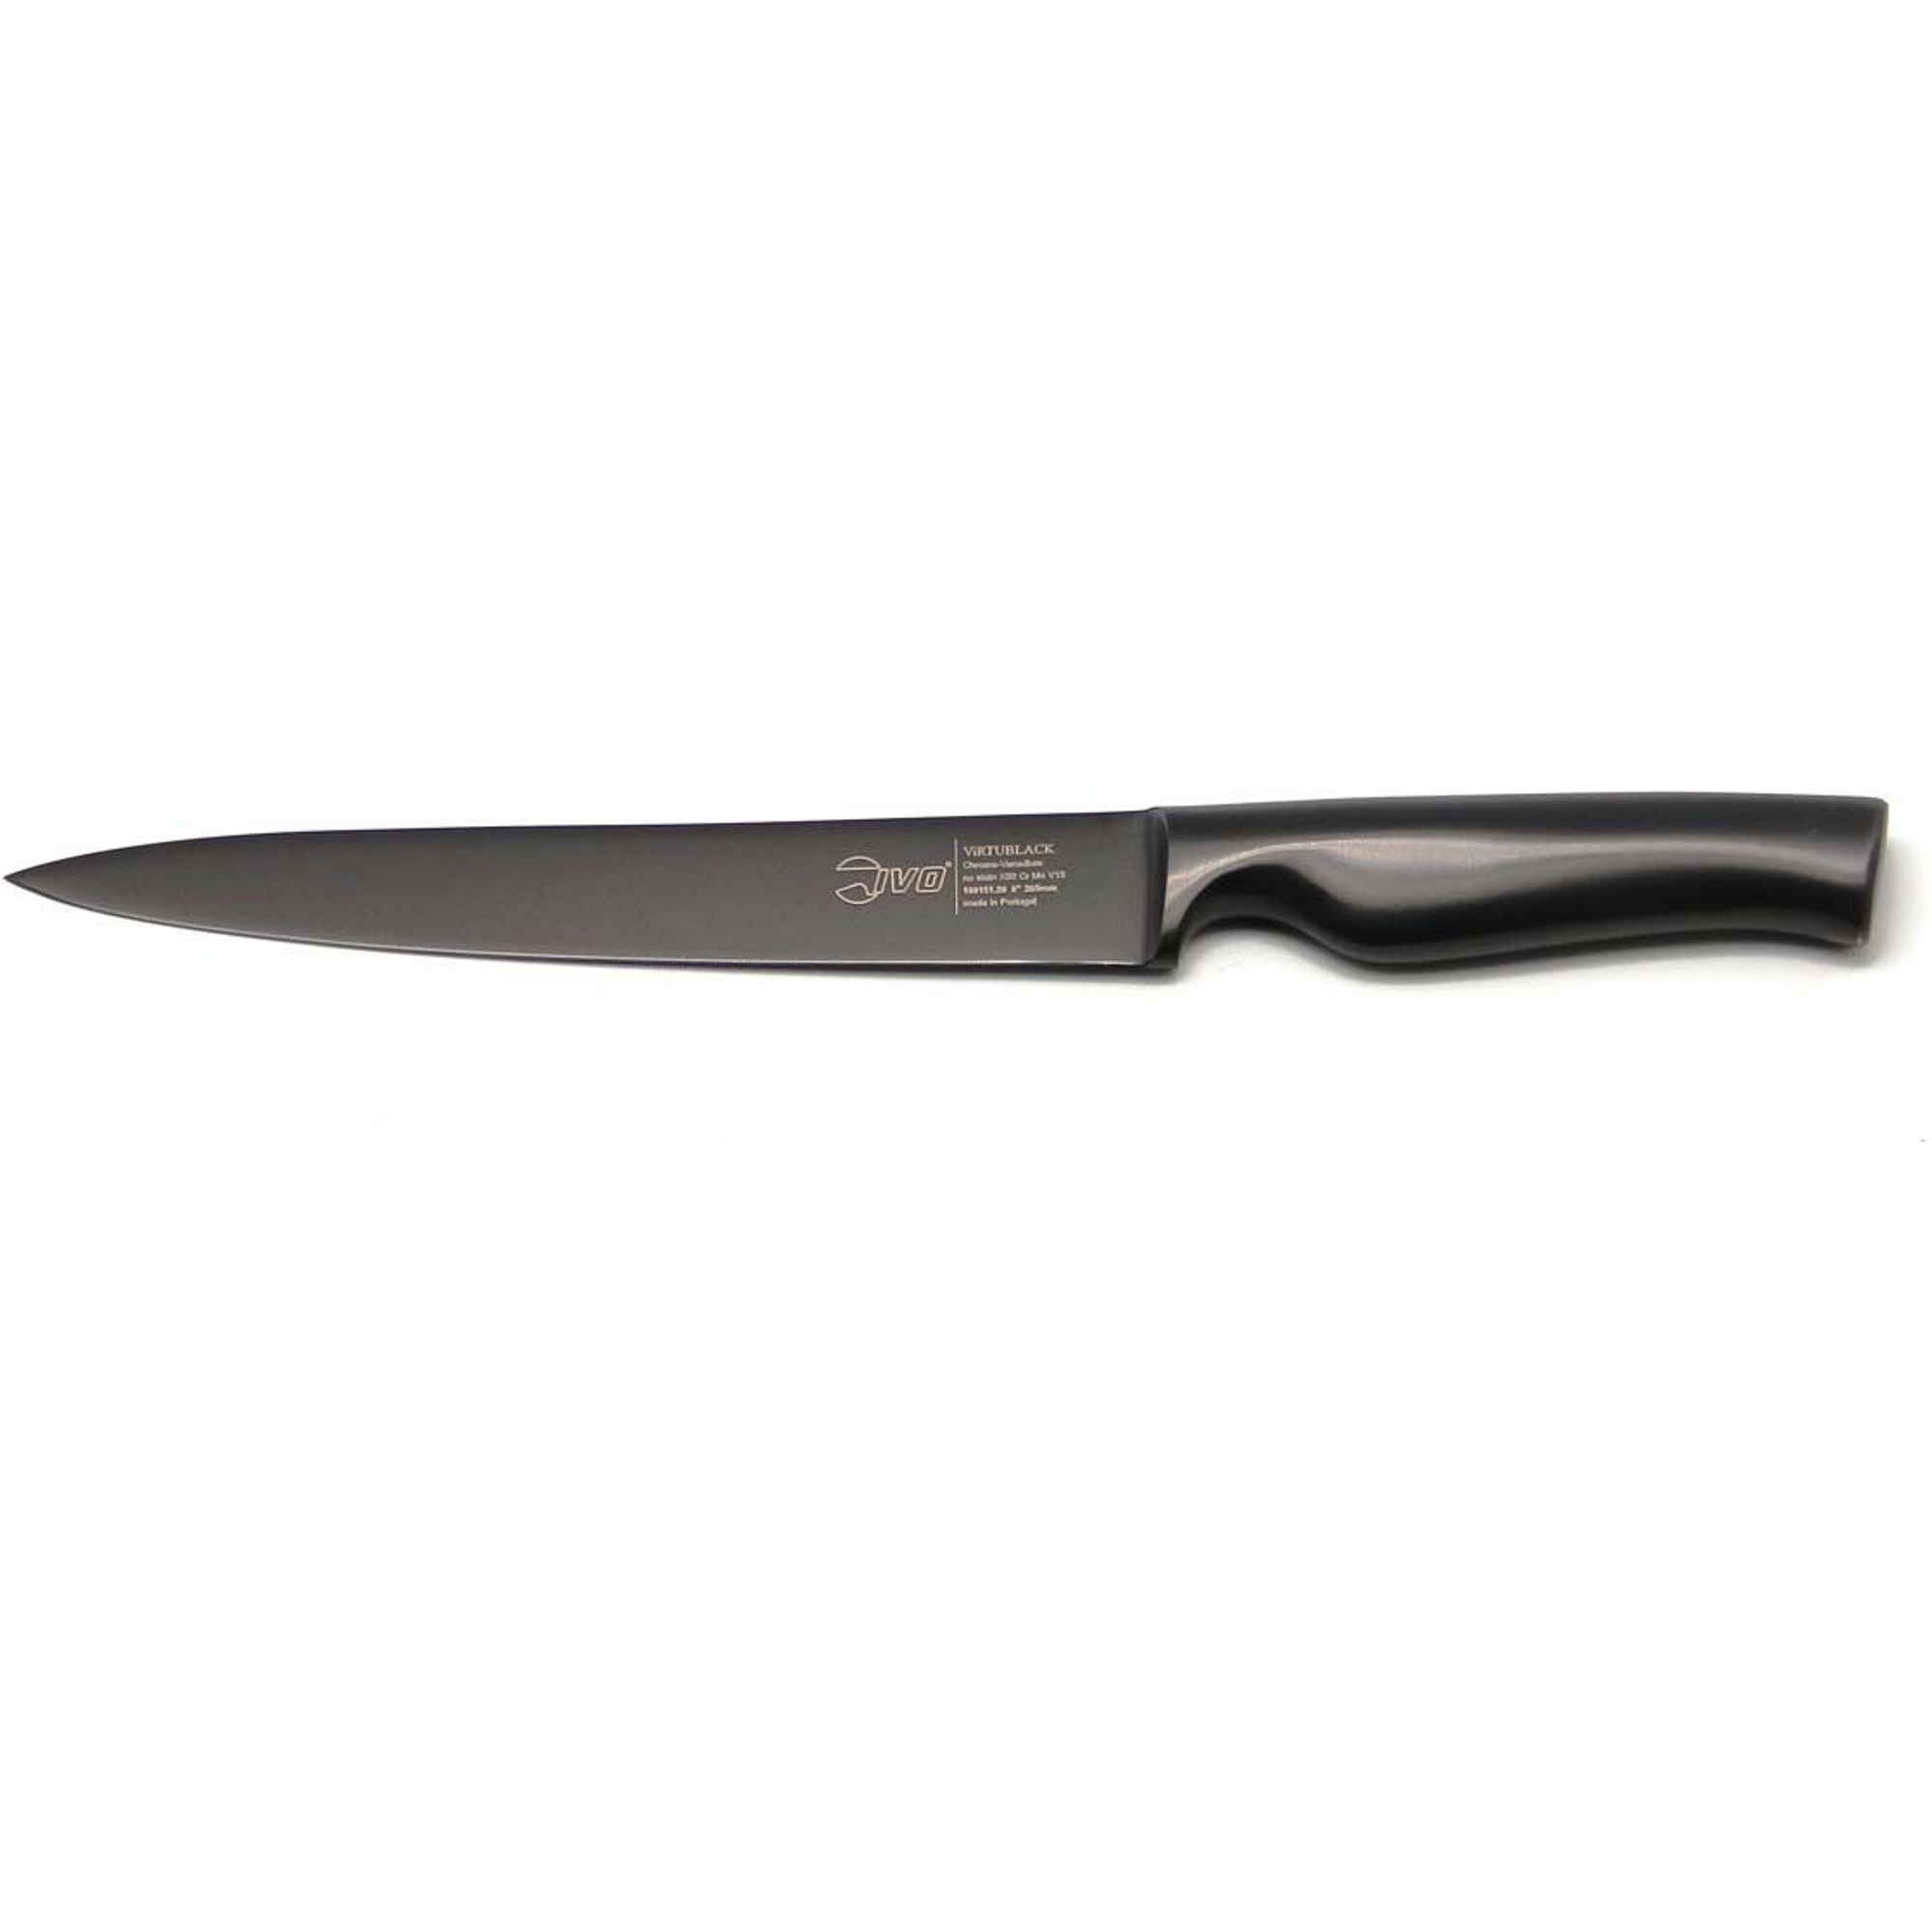 Нож разделочный 20см virtu black Ivo нож для хлеба 20см virtu black ivo